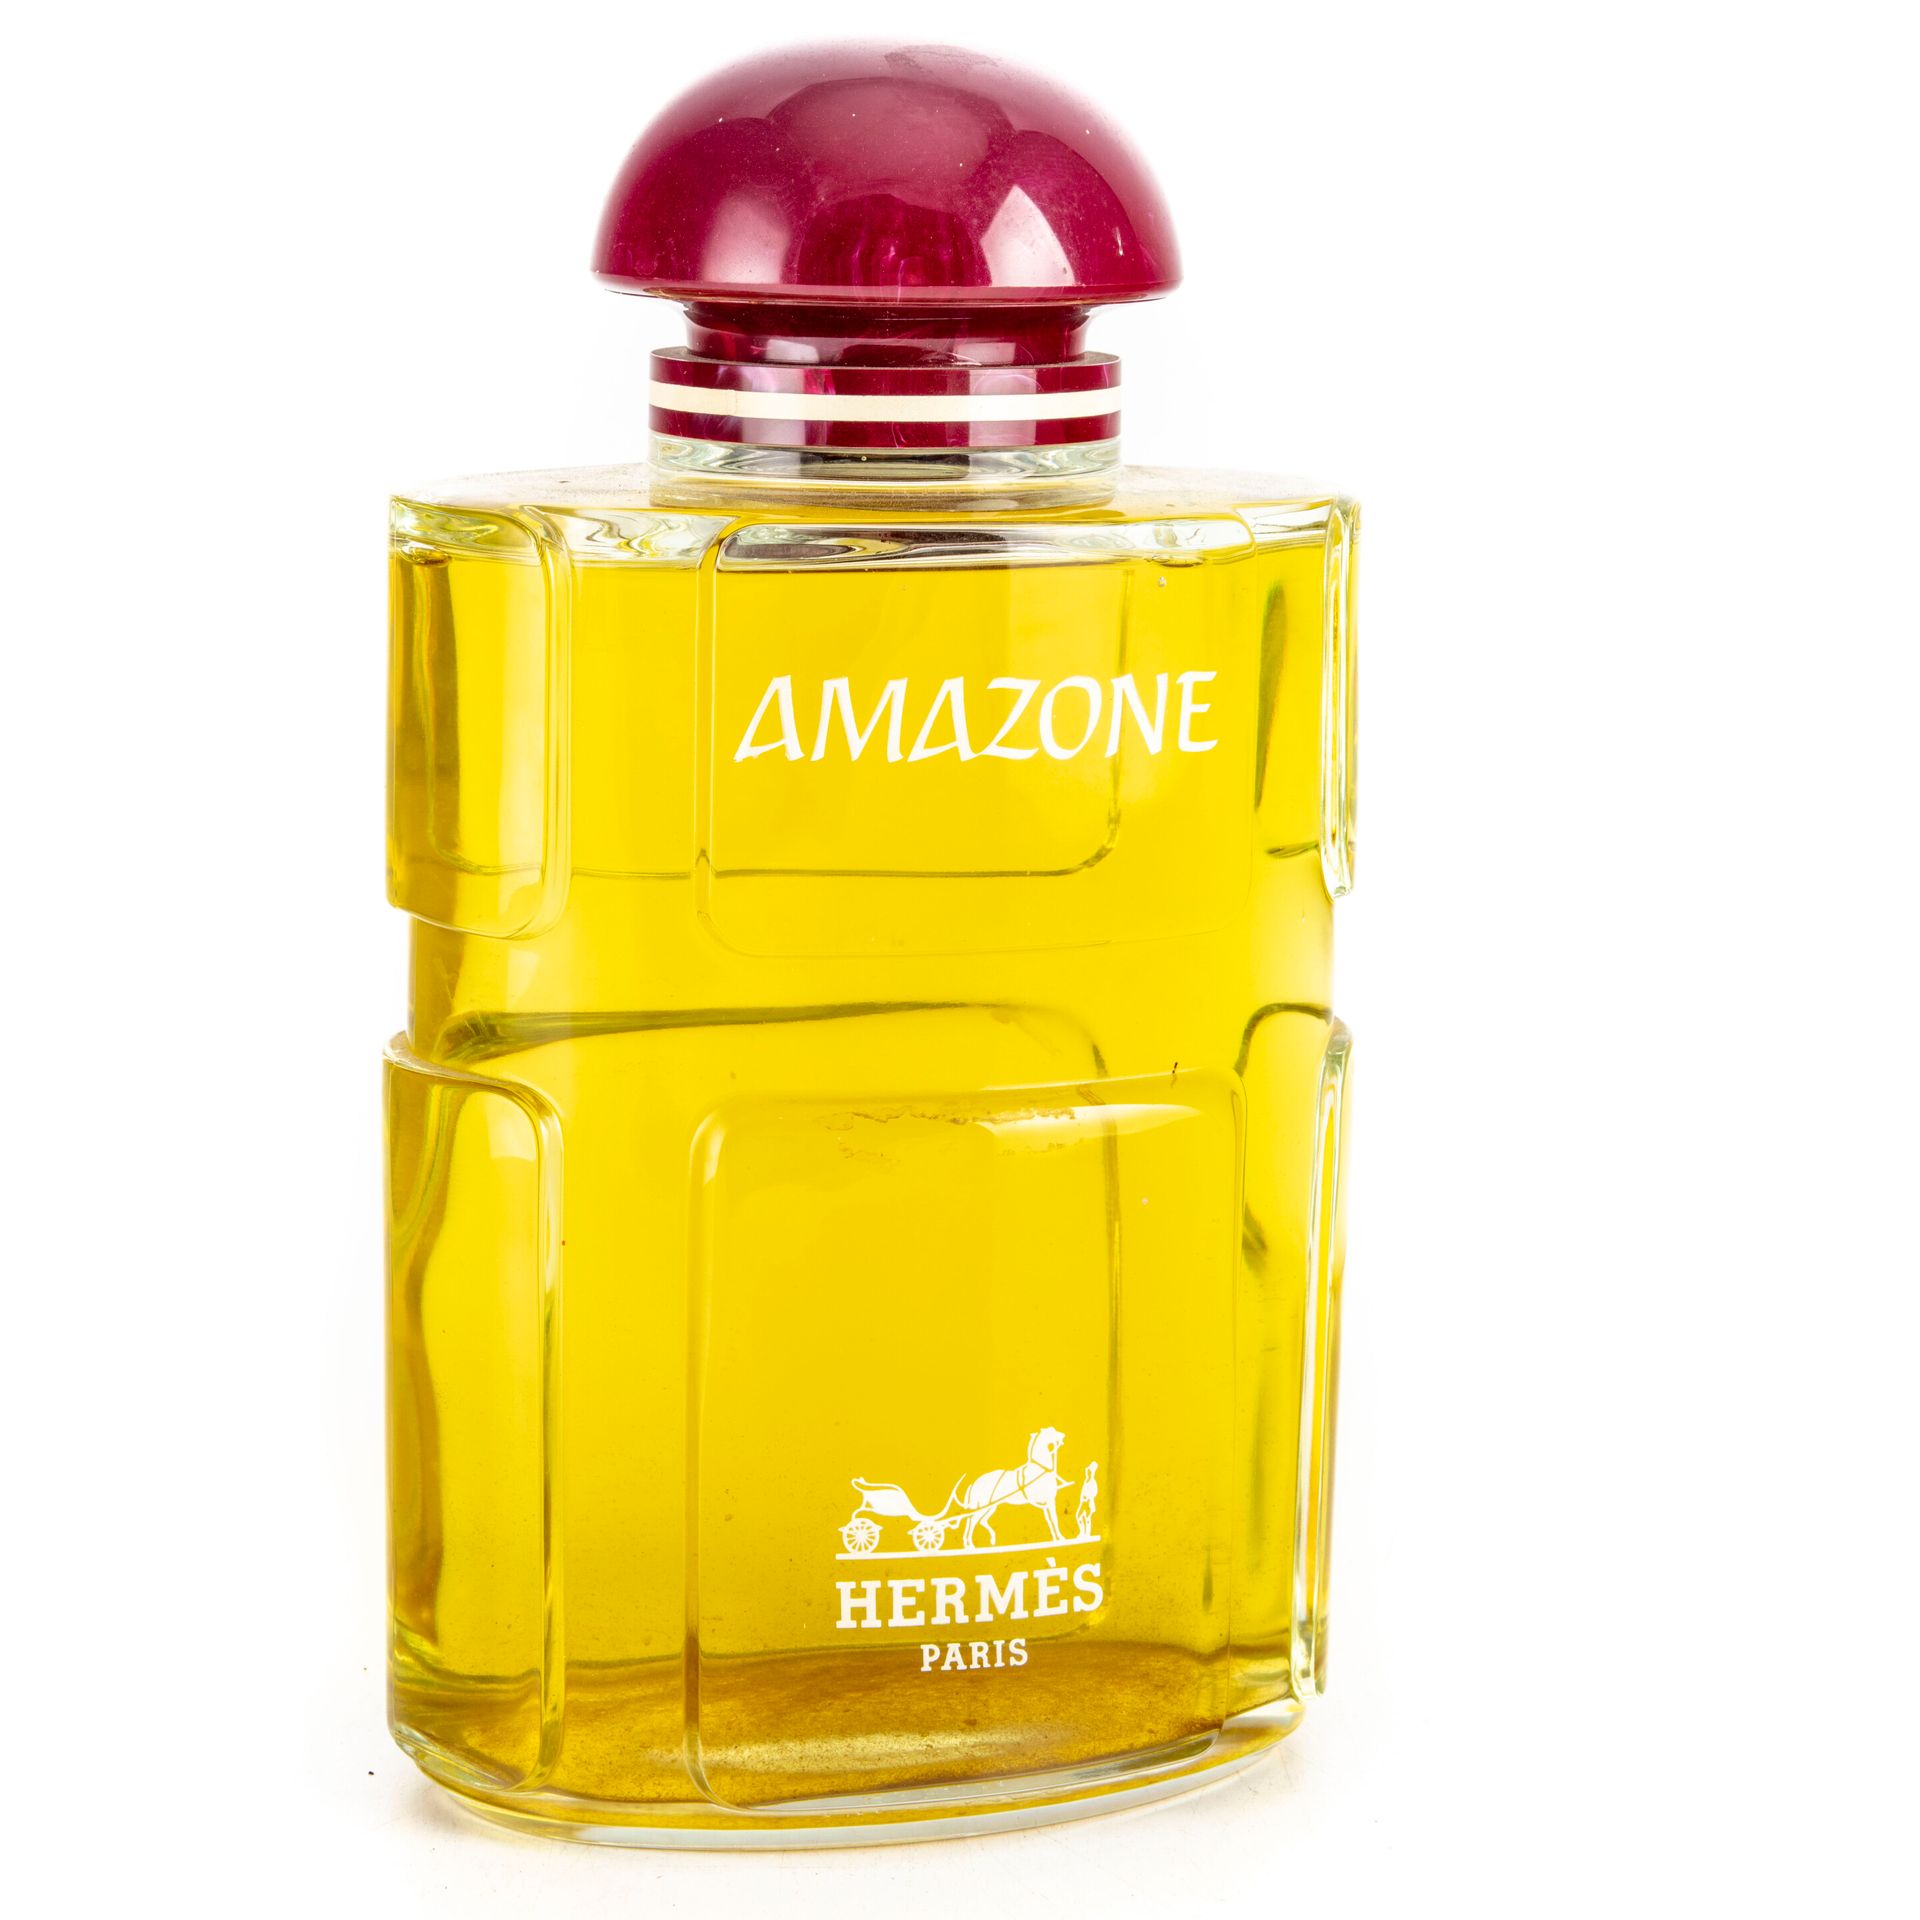 Null HERMES - Paris 

Flacon en verre, parfum "AMAZONE", factice

H. : 34 cm